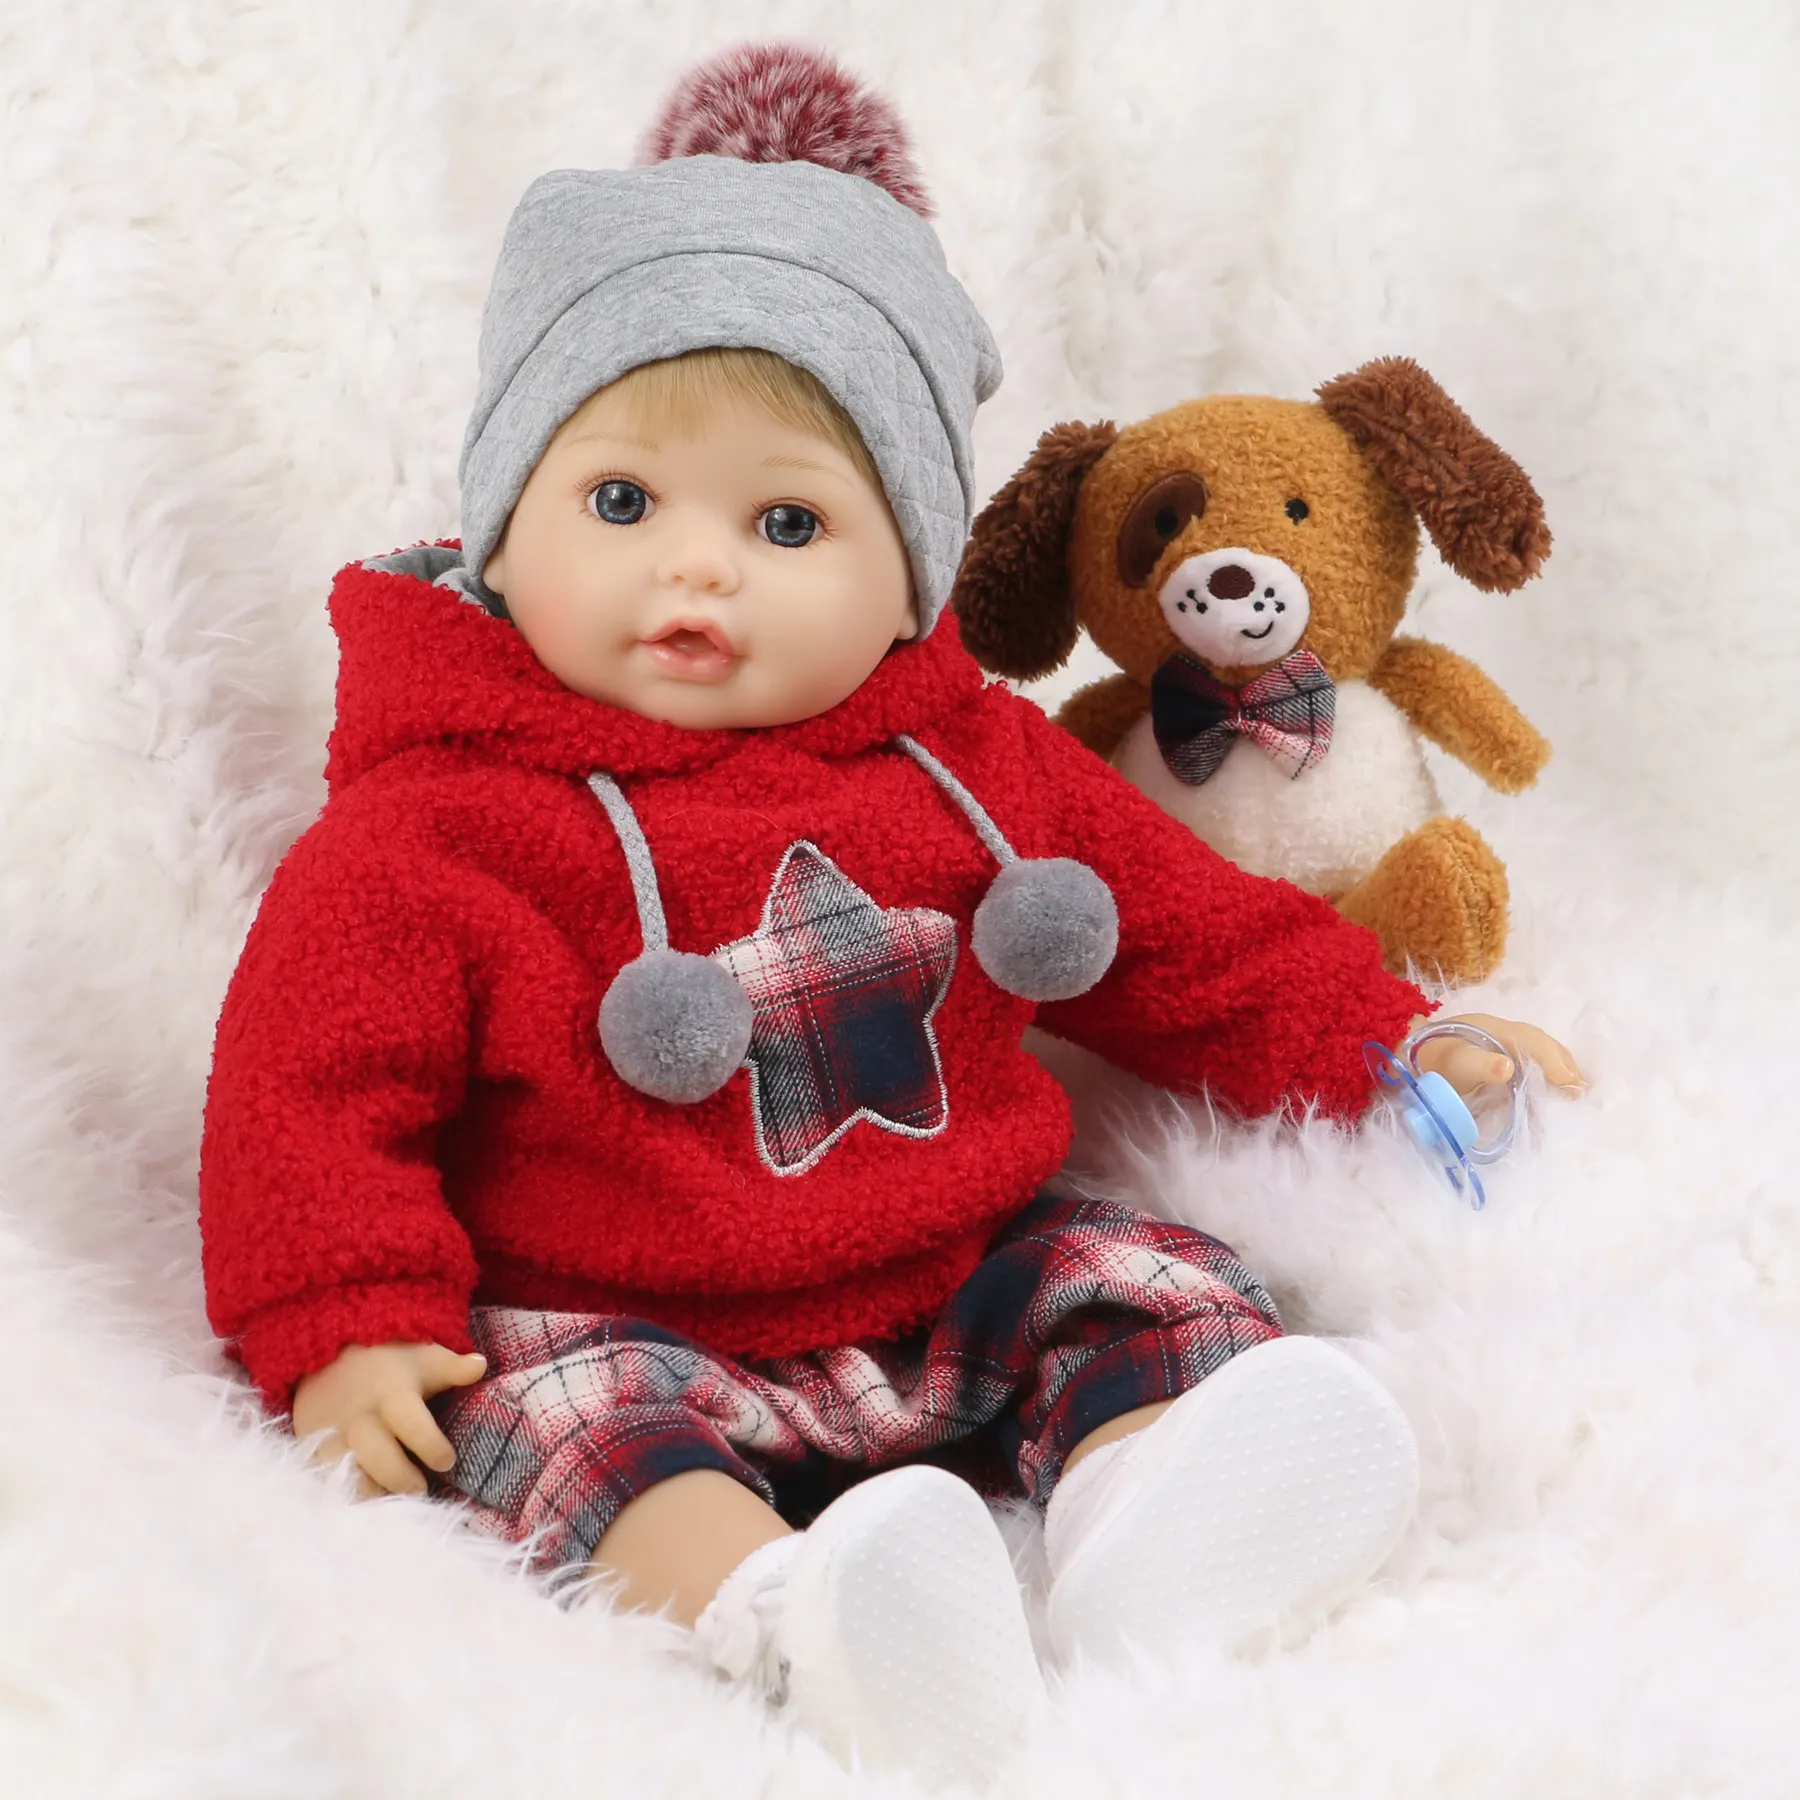 New Clothes Design Reborn Baby Dolls Cute Realistic Soft Pvc Dolls New Born Baby Dolls For Kids